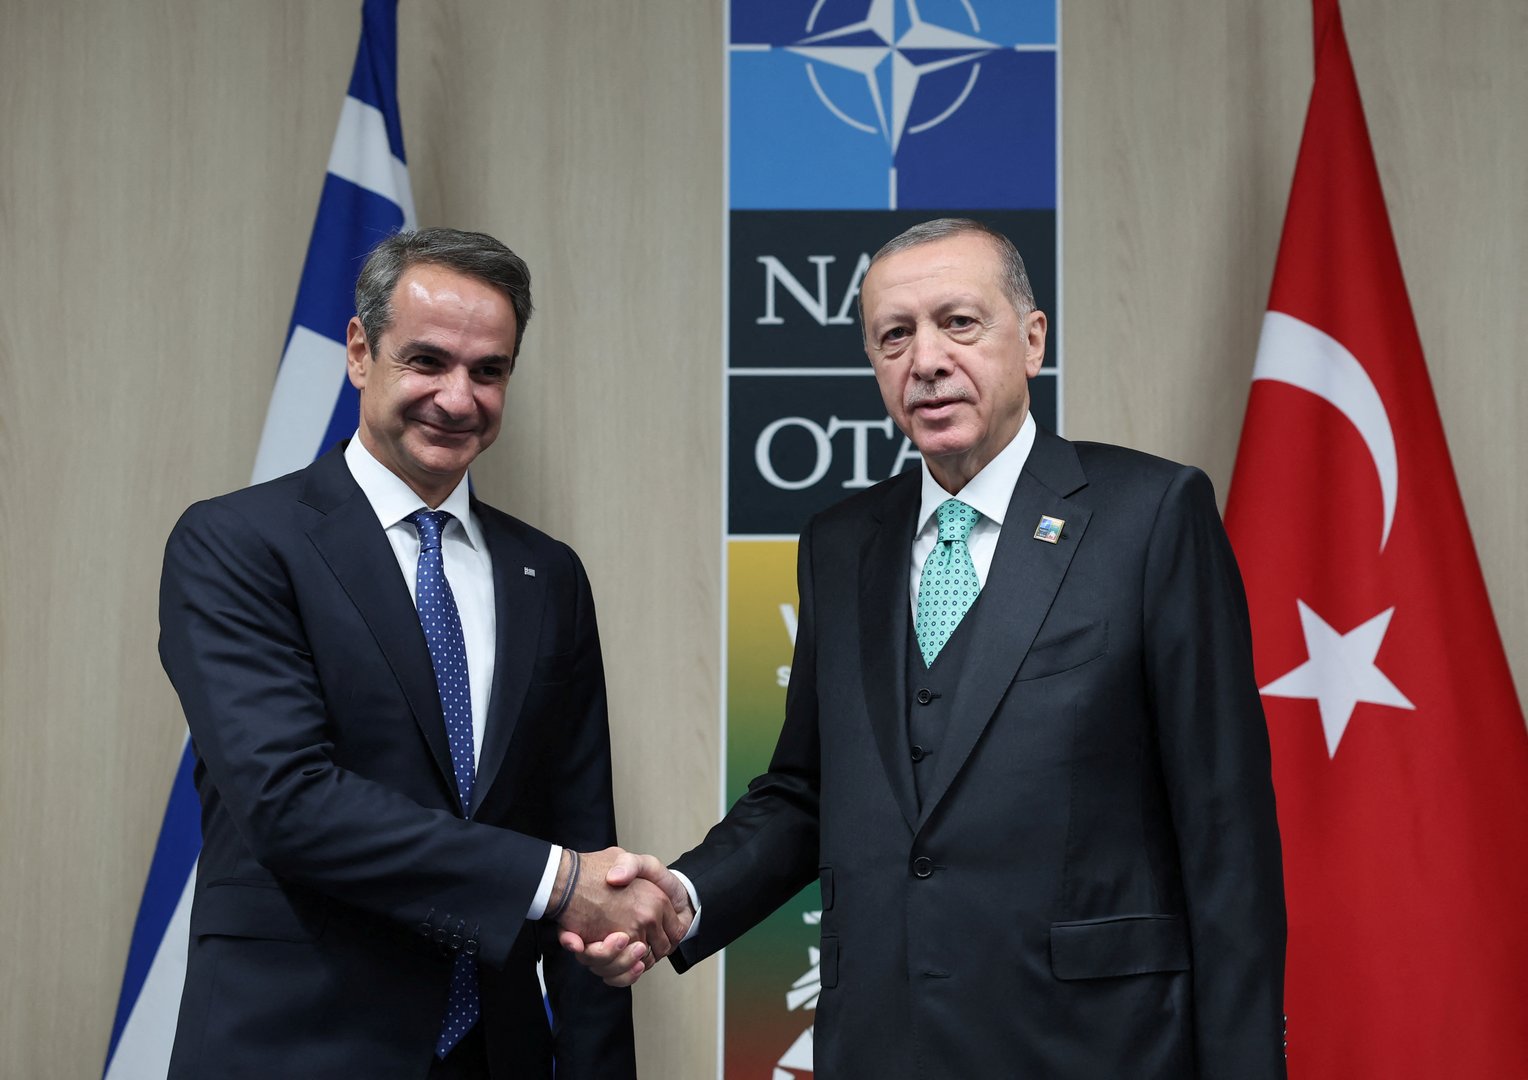 image Mitsotakis, Erdogan hail positive climate at Nato summit